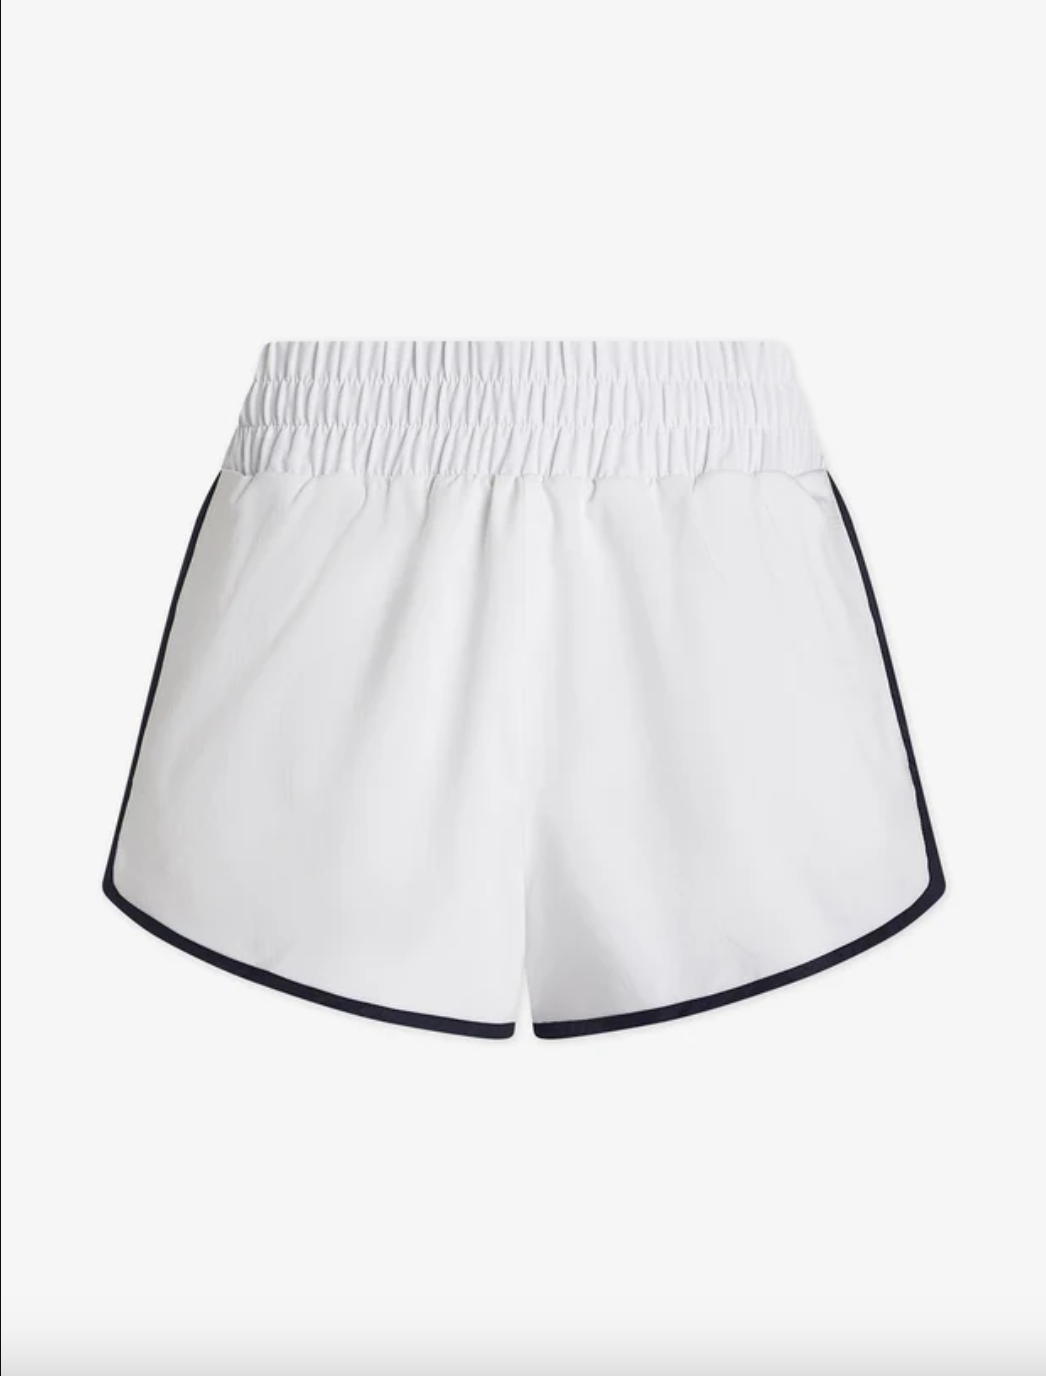 Arlington Running Shorts-White